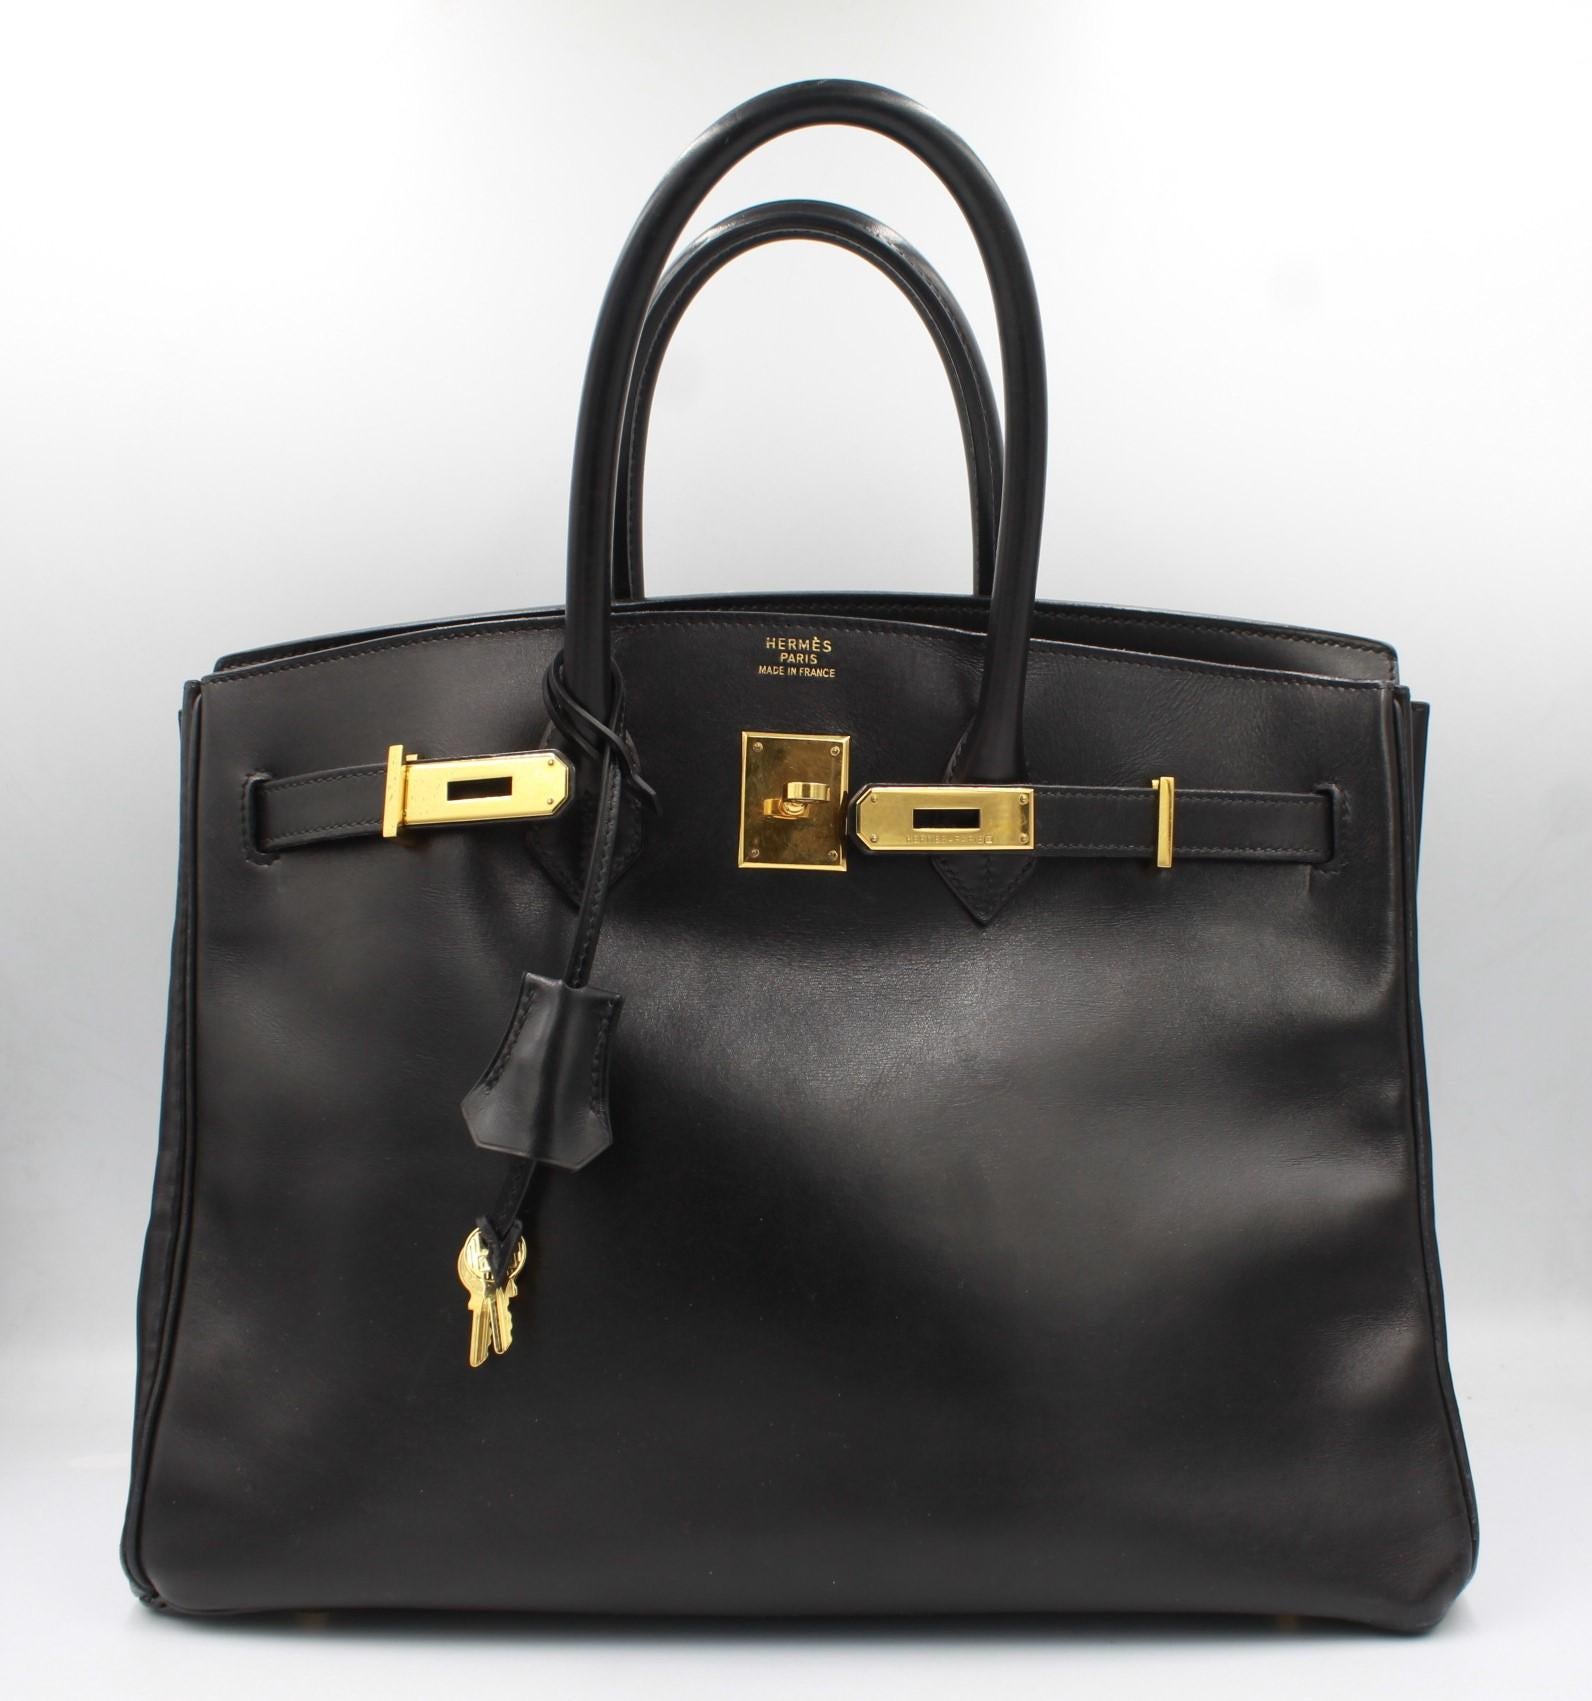 Hermès Birkin 35 handbag in black box leather 1